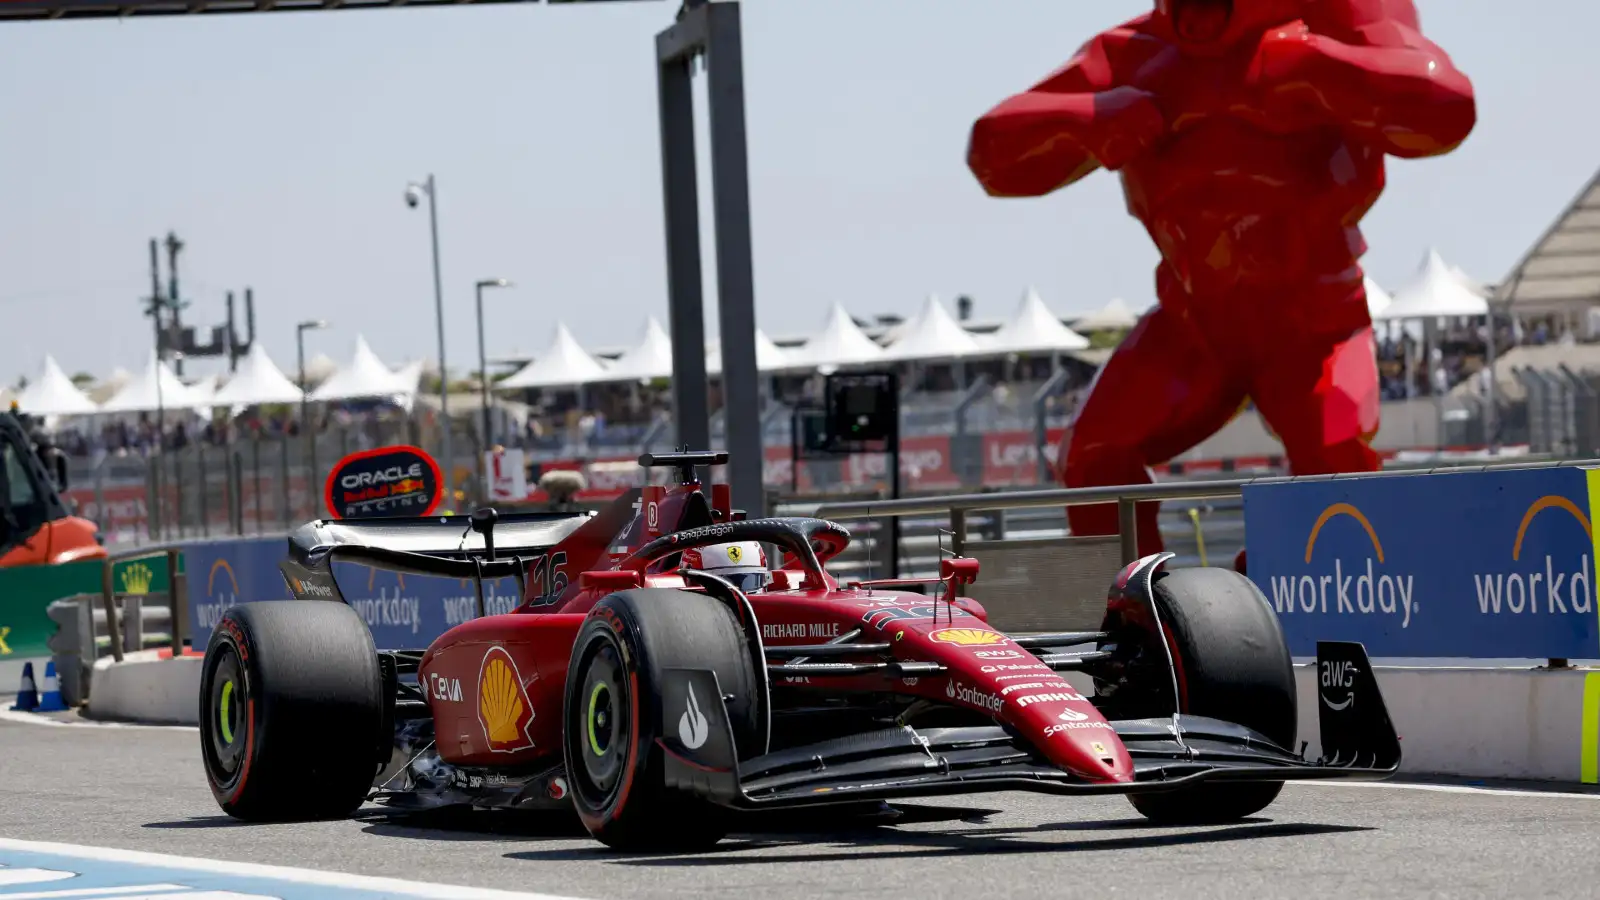 Ferrari's Charles Leclerc at the French Grand Prix. Paul Ricard, July 2022.